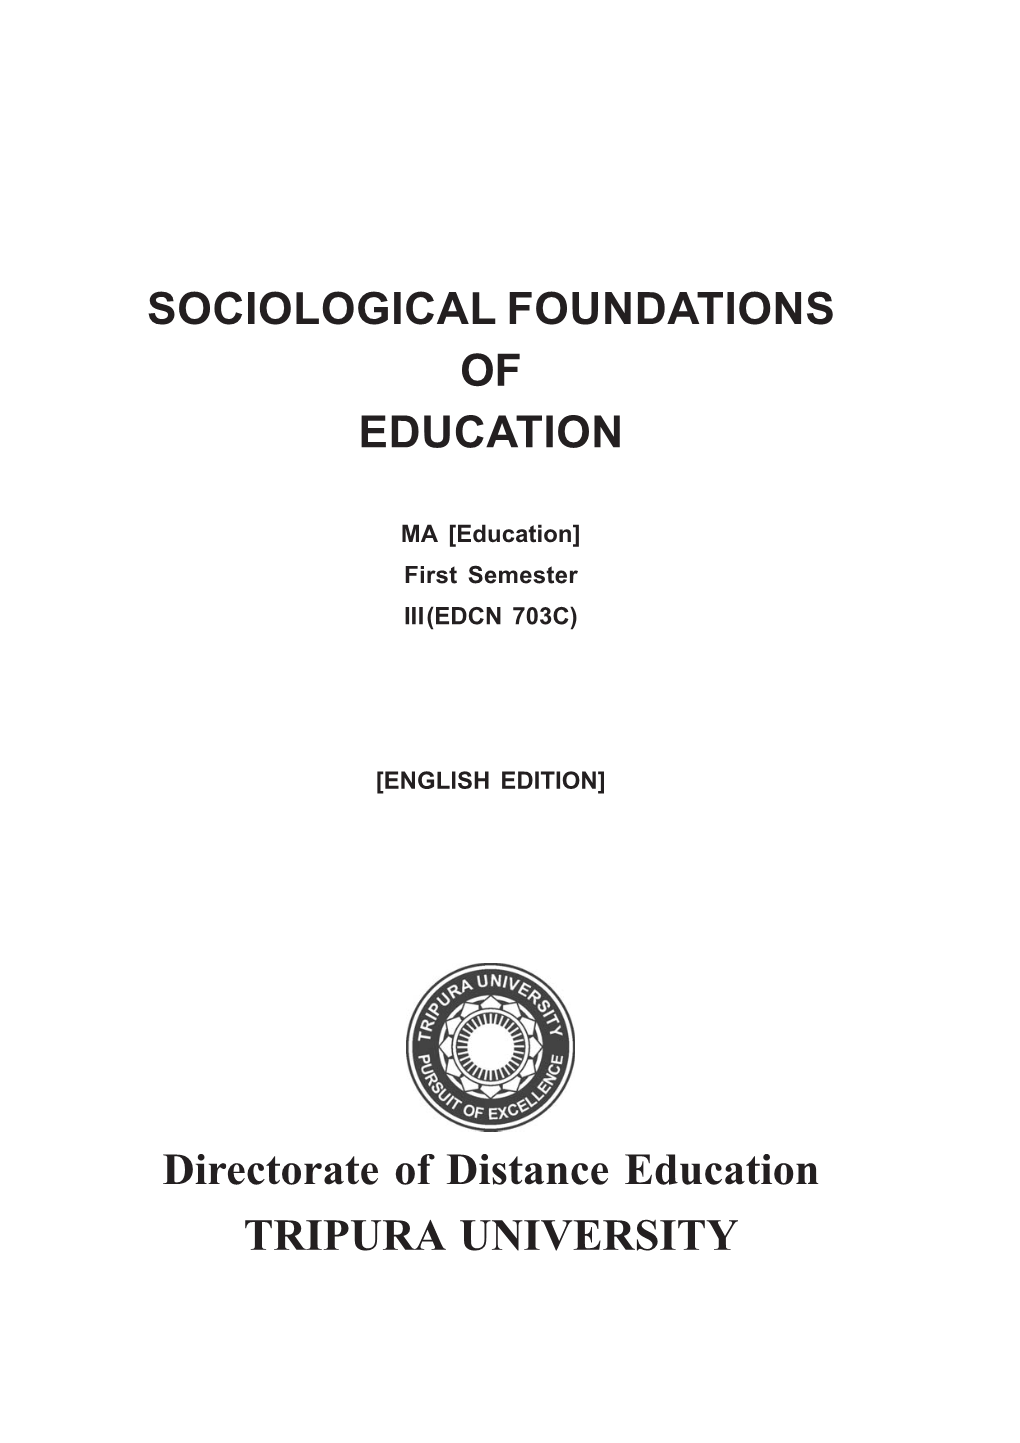 EDCN-703C-Sociological Foundation of Education.Pdf